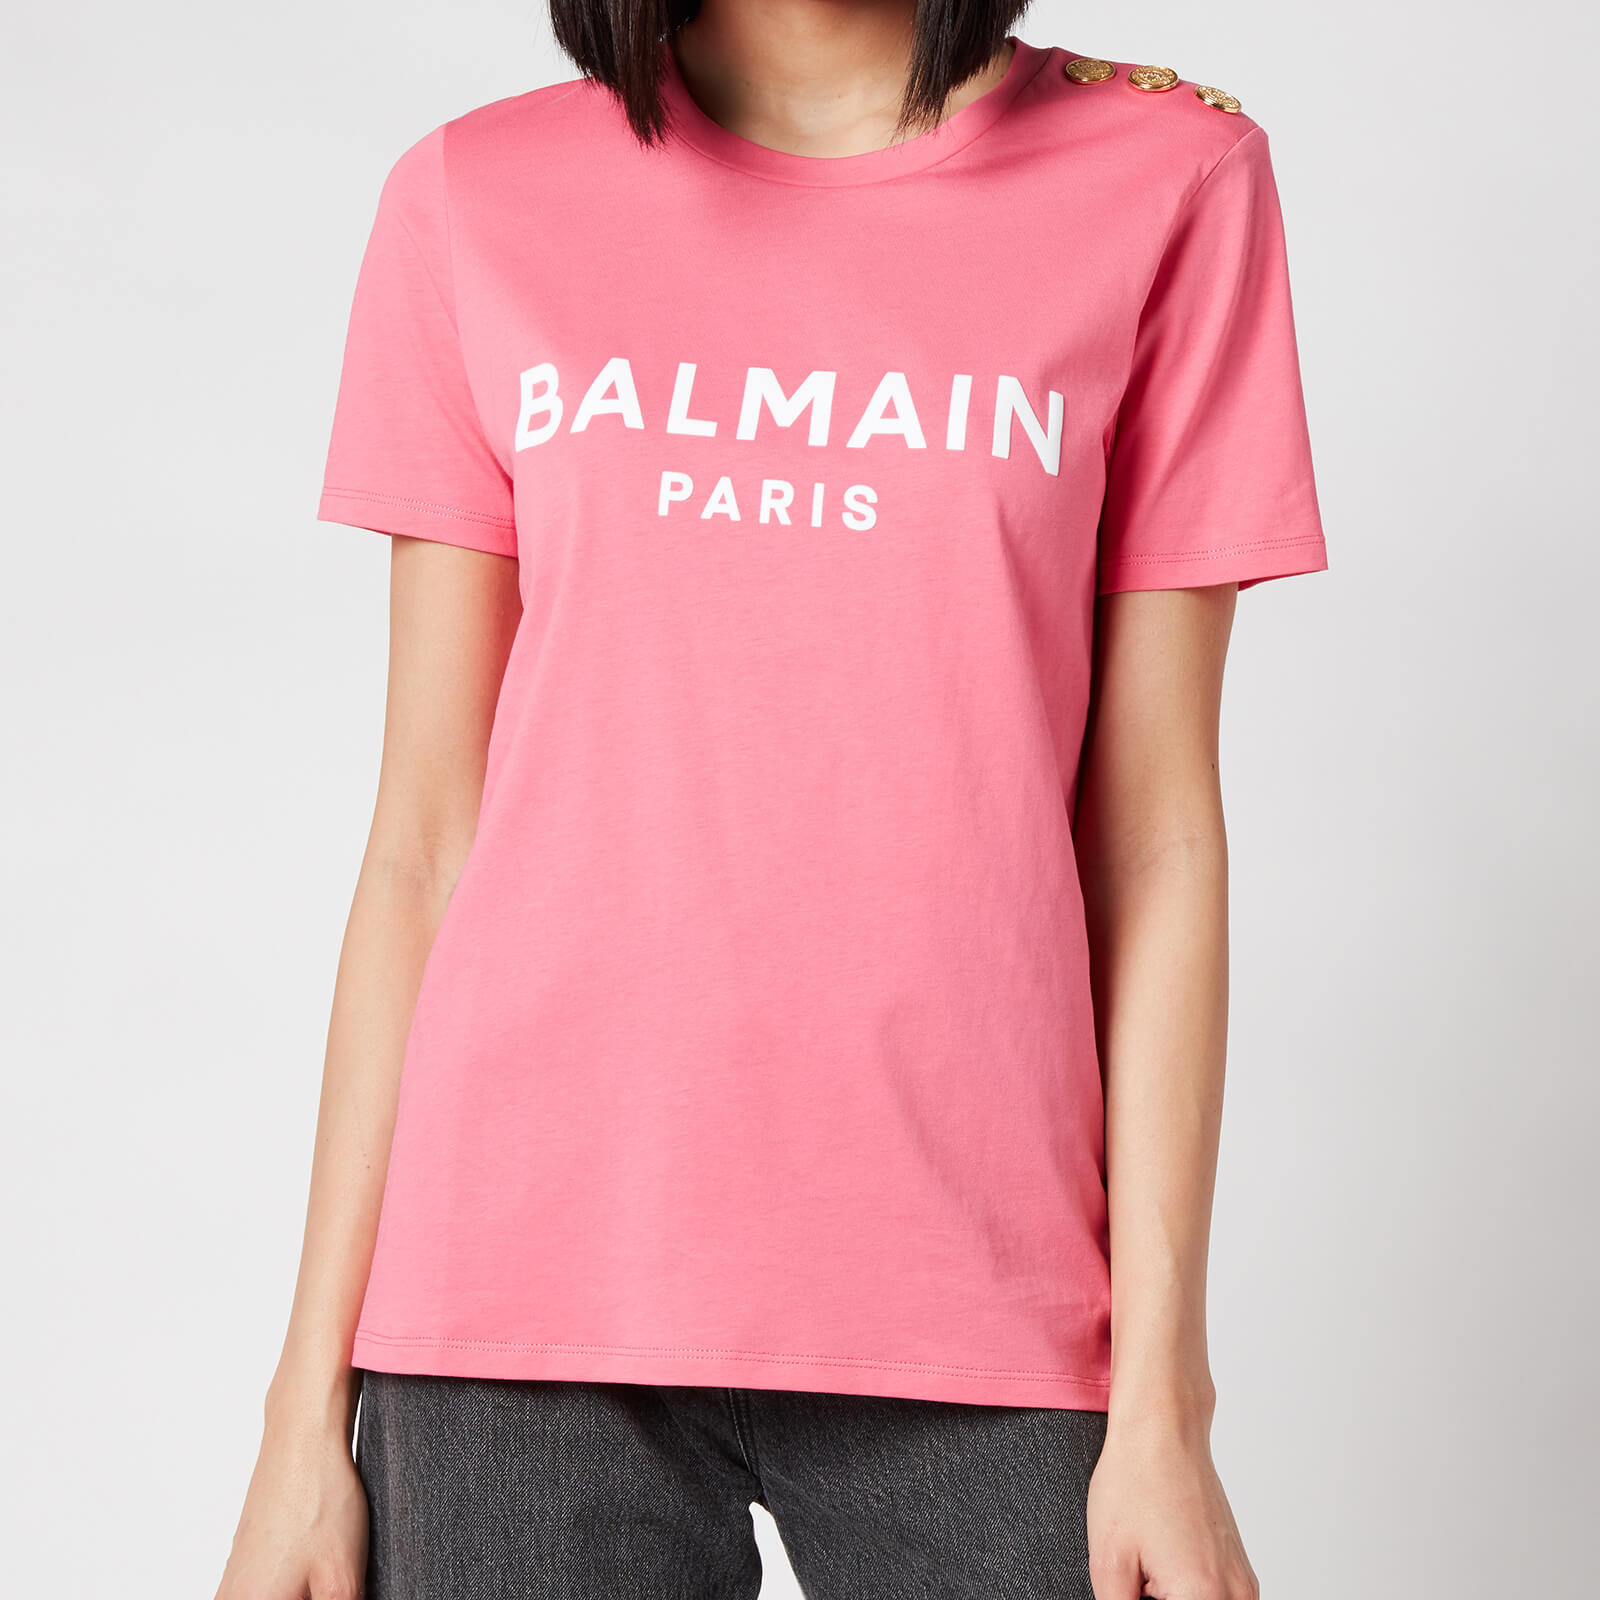 Balmain Women's 3 Button Flocked Logo T-Shirt - Rose/Blanc - S